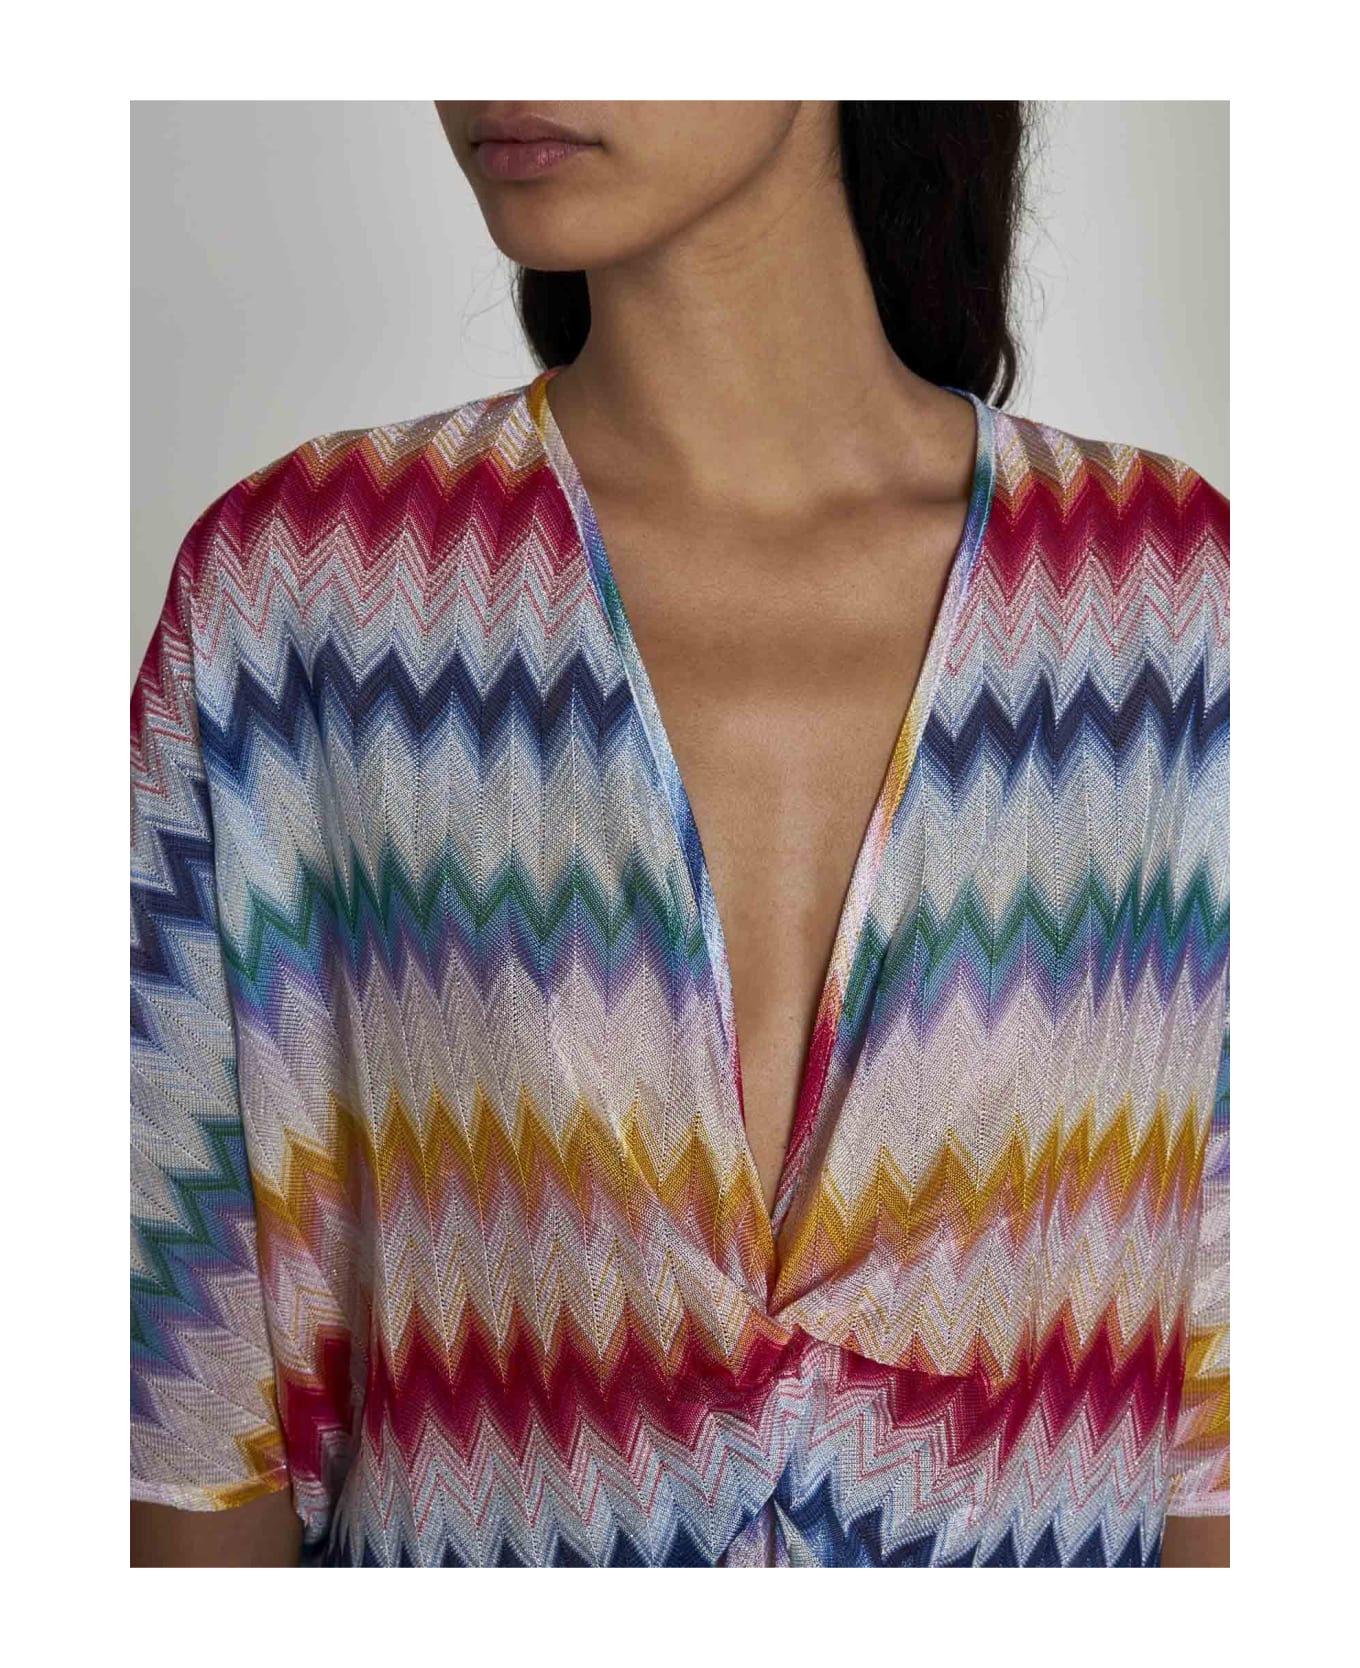 Missoni Striped Lame' Knit Long Dress - Multicolor